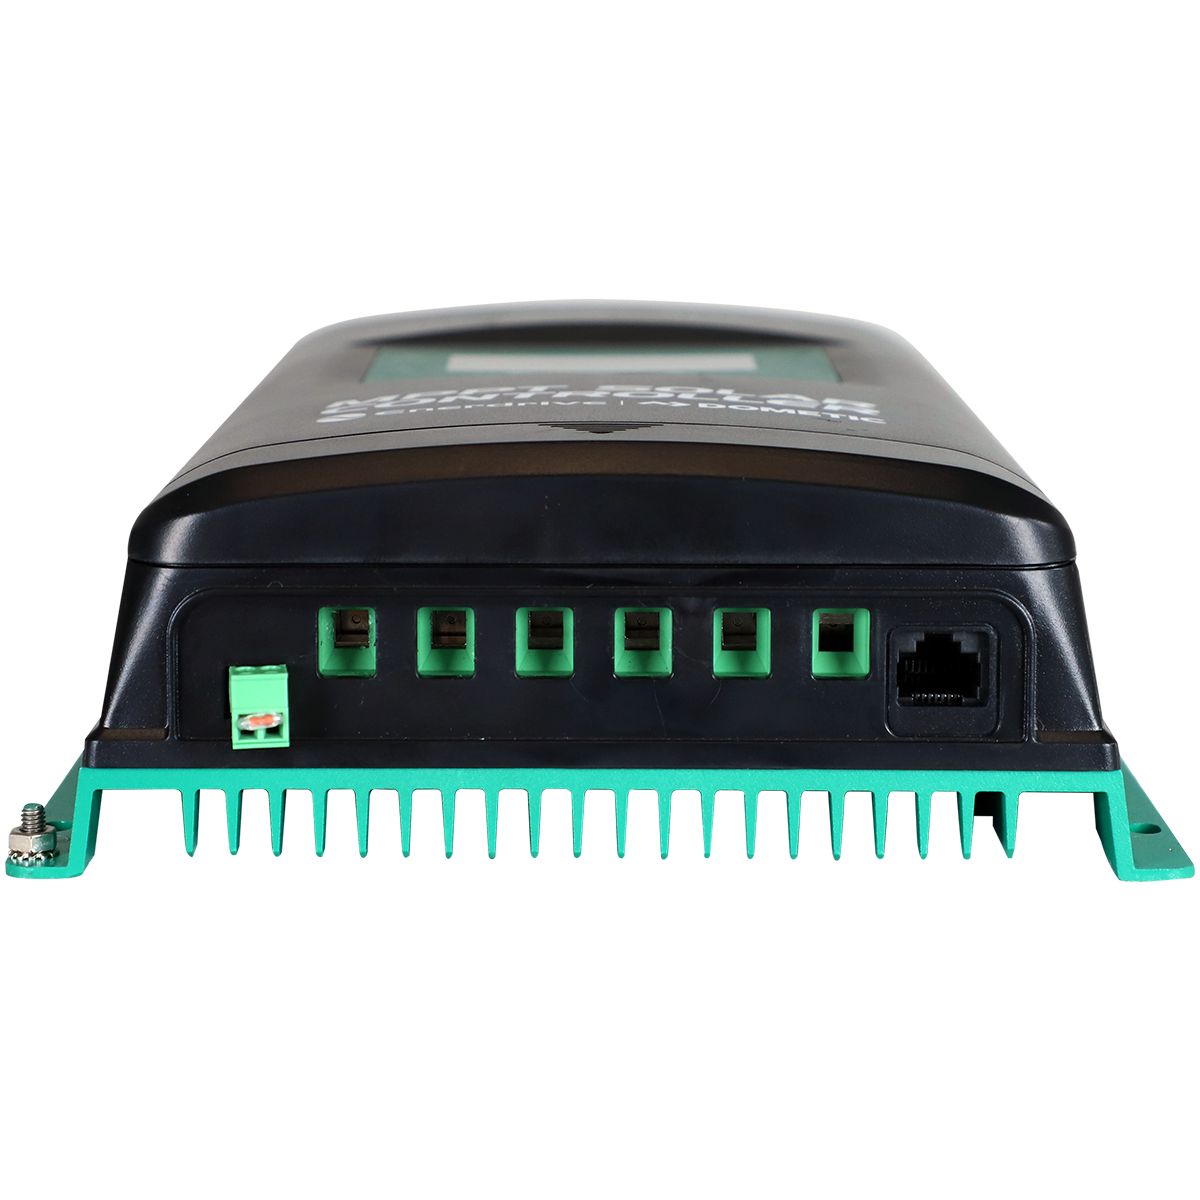 Enerdrive 10A MPPT Solar Charge Controller 12/24v with Display - EN43510 | Enerdrive